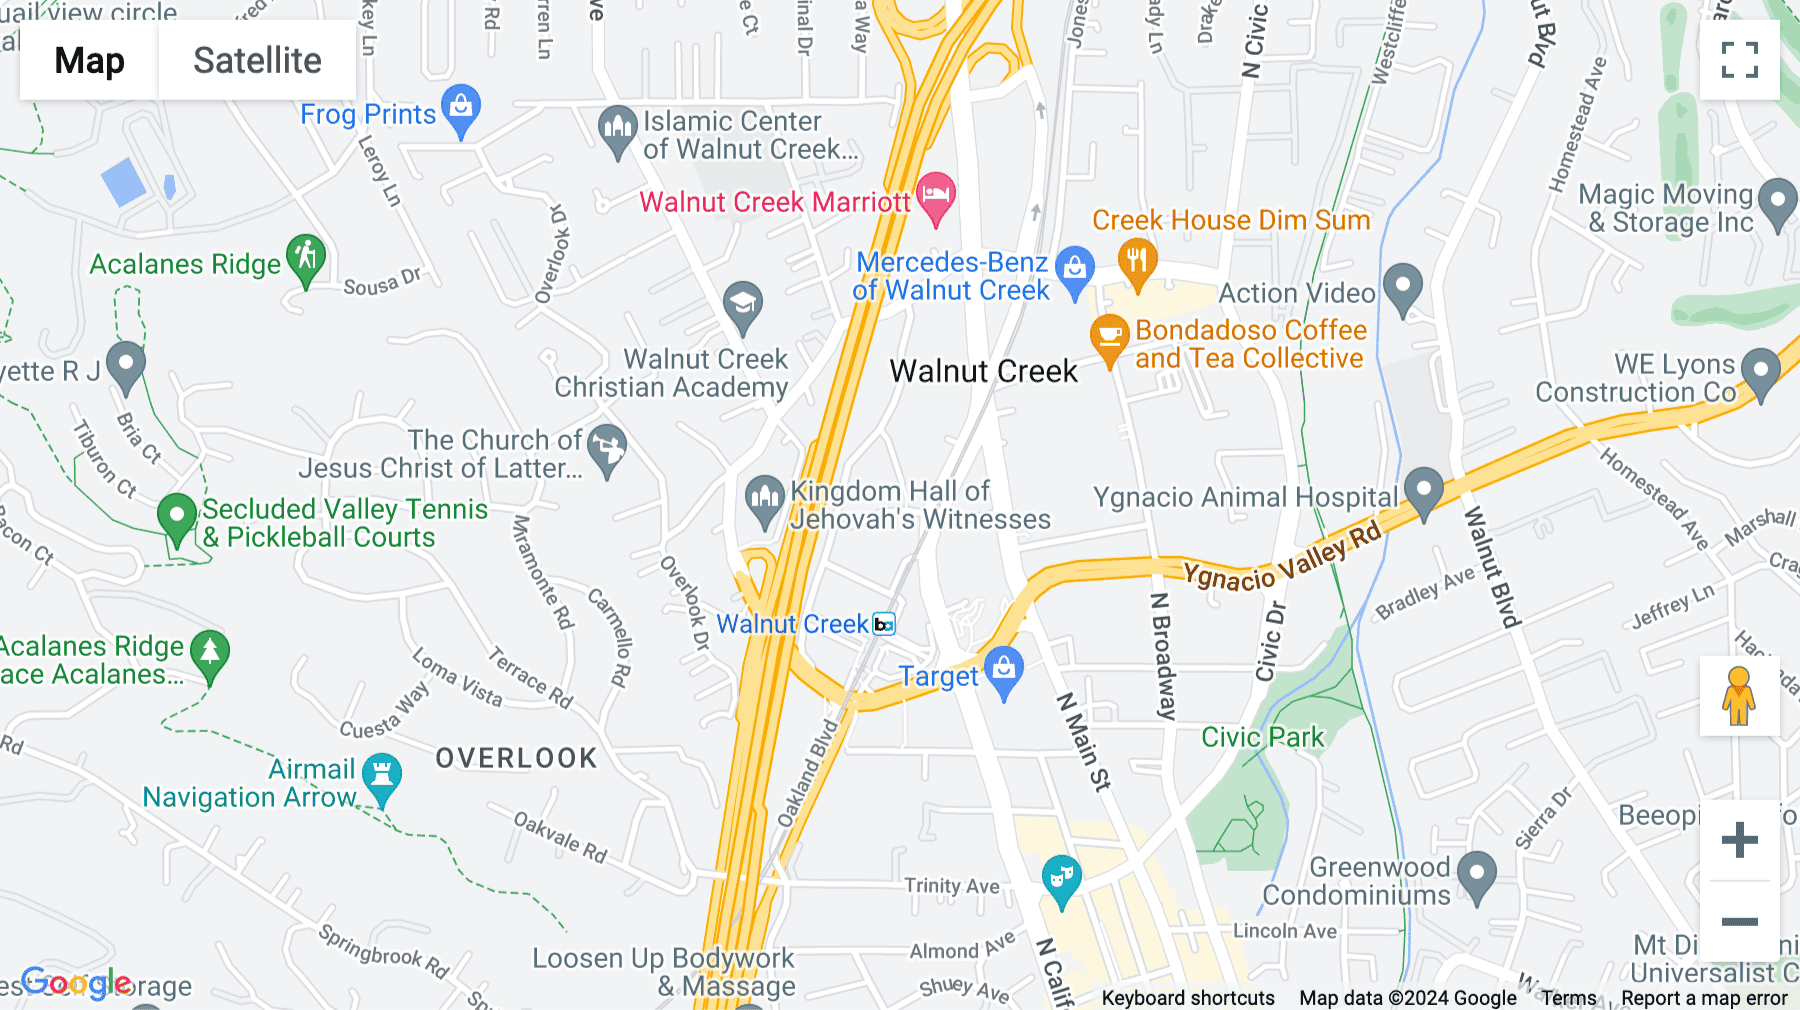 Click for interative map of 2121 North California Boulevard, Suite 290, Downtown Walnut Creek Center, Walnut Creek